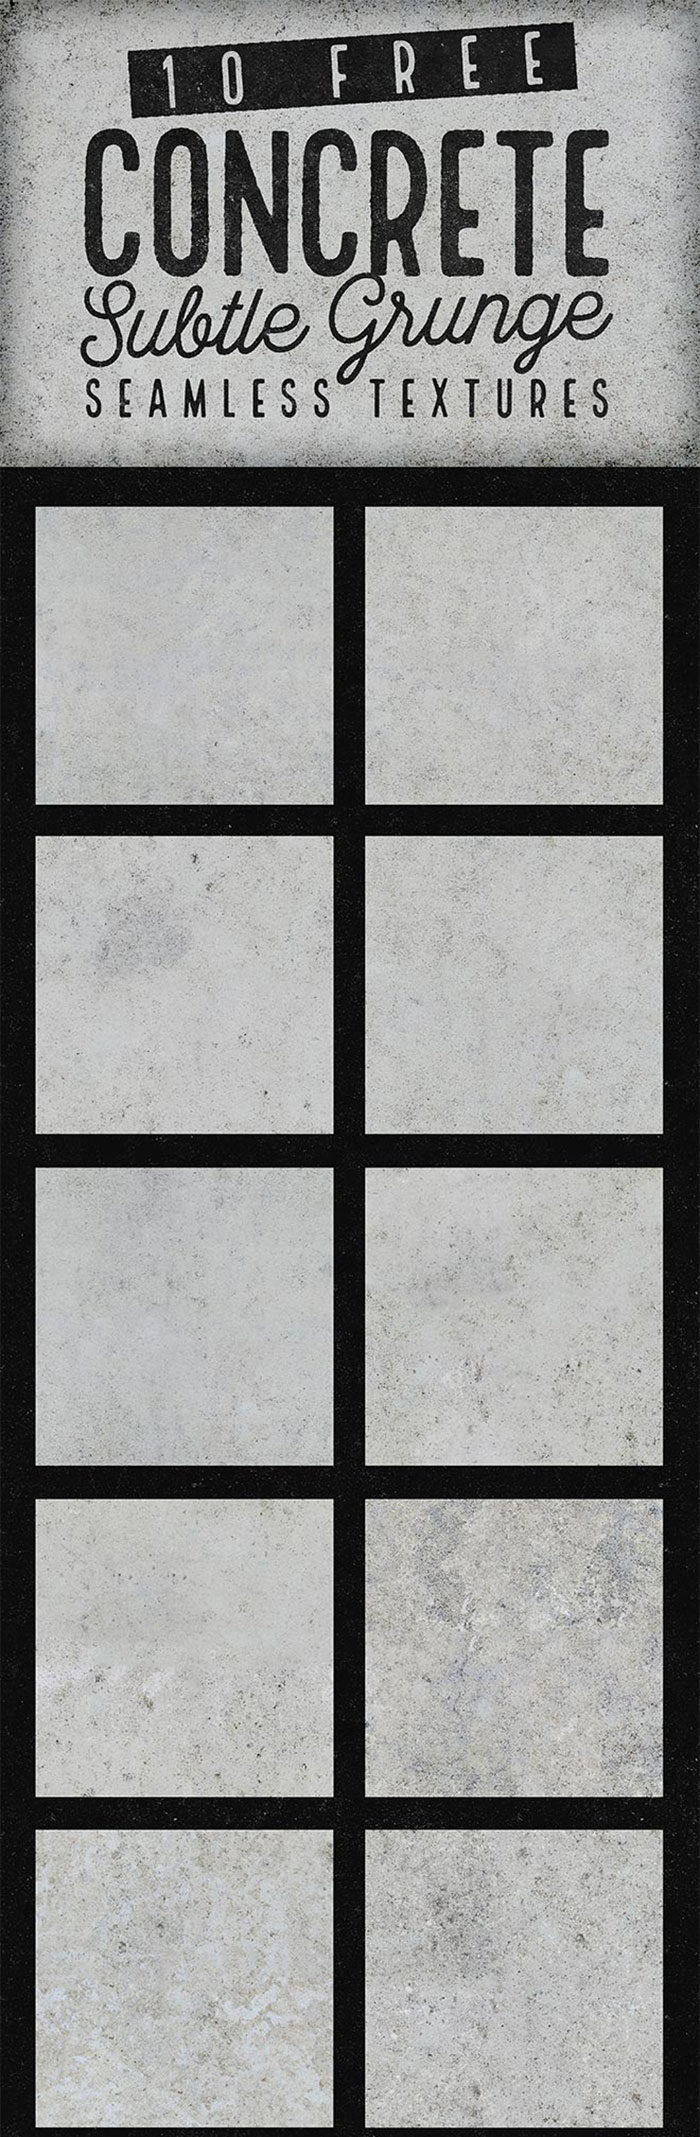 10-Free-Seamless-Subtle-Grunge-Concrete-Textures-700x2137 Free concrete texture examples to download